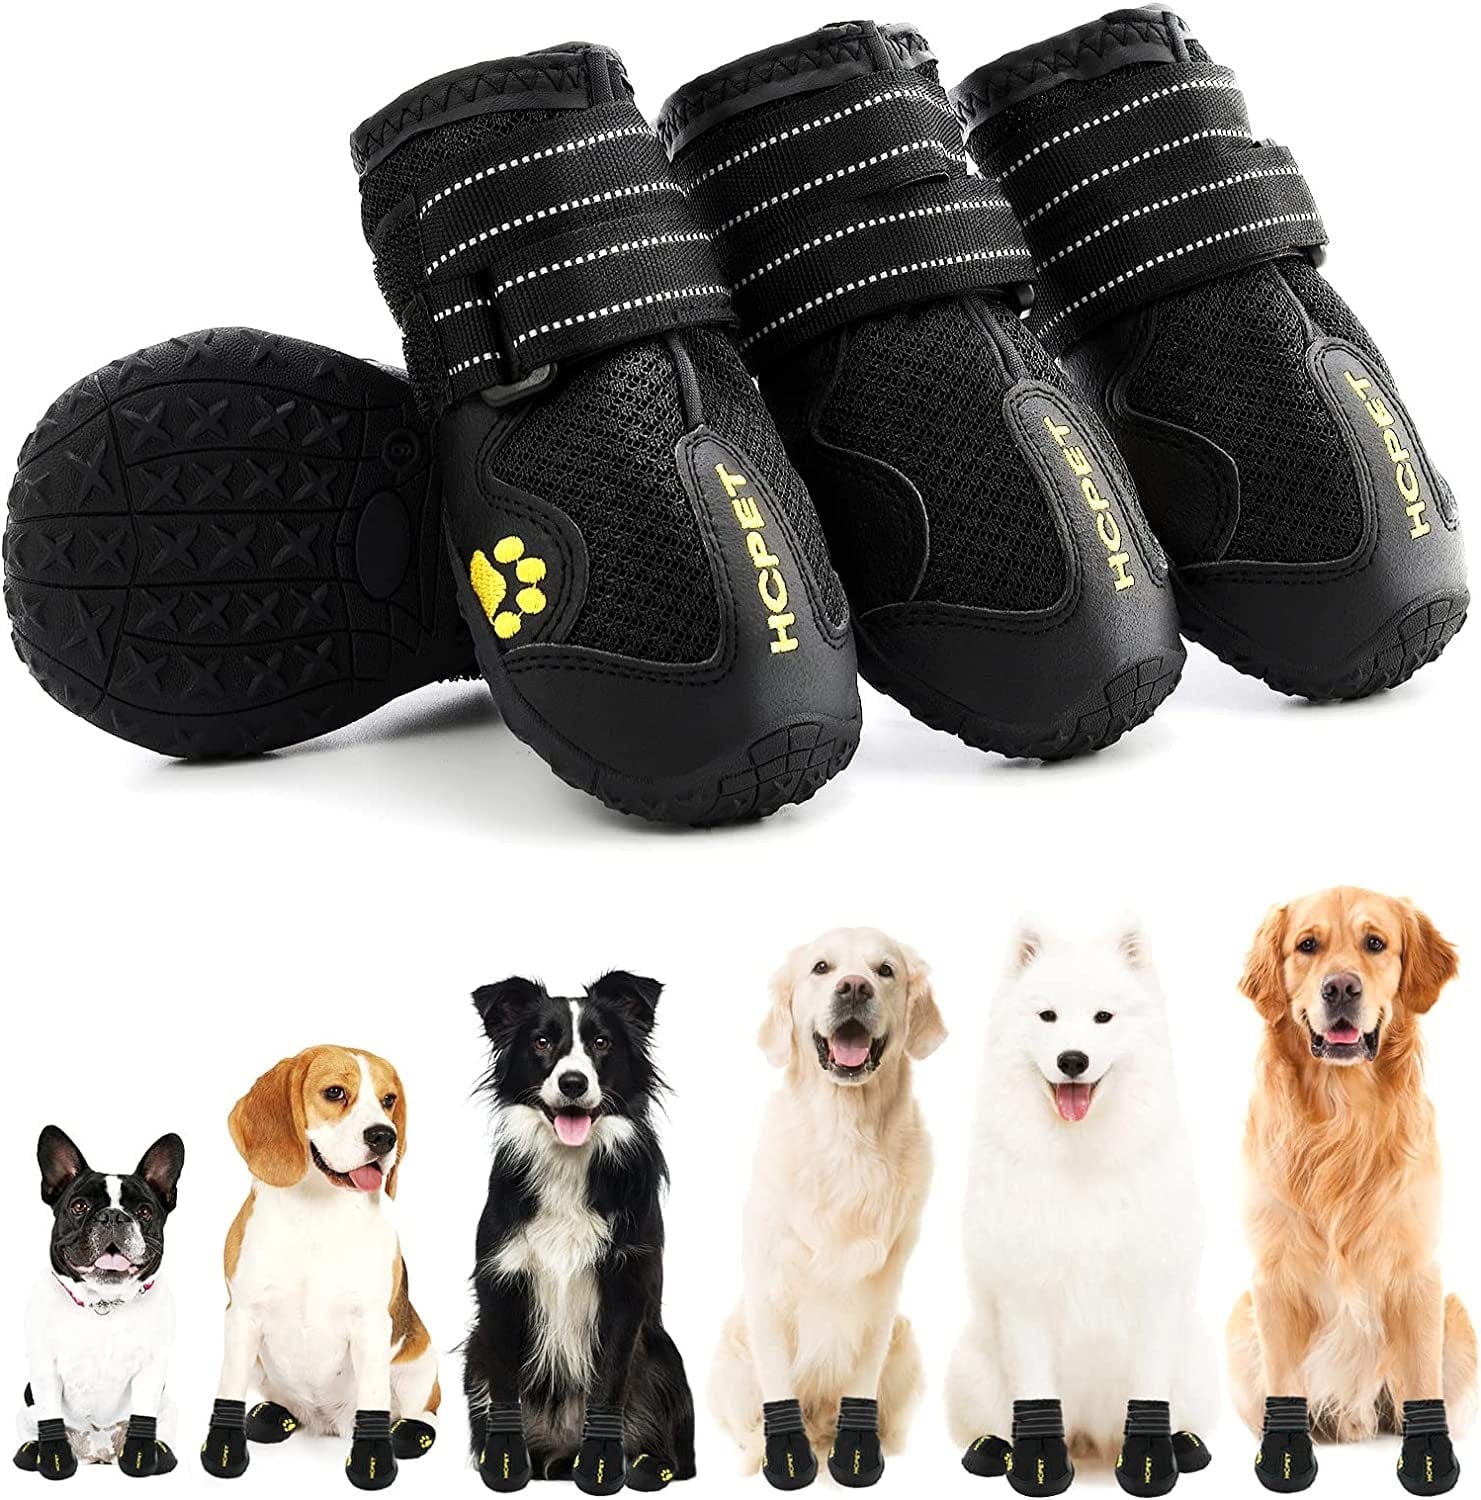 PAWZ Dog Boots - Waterproof Dog Boots 